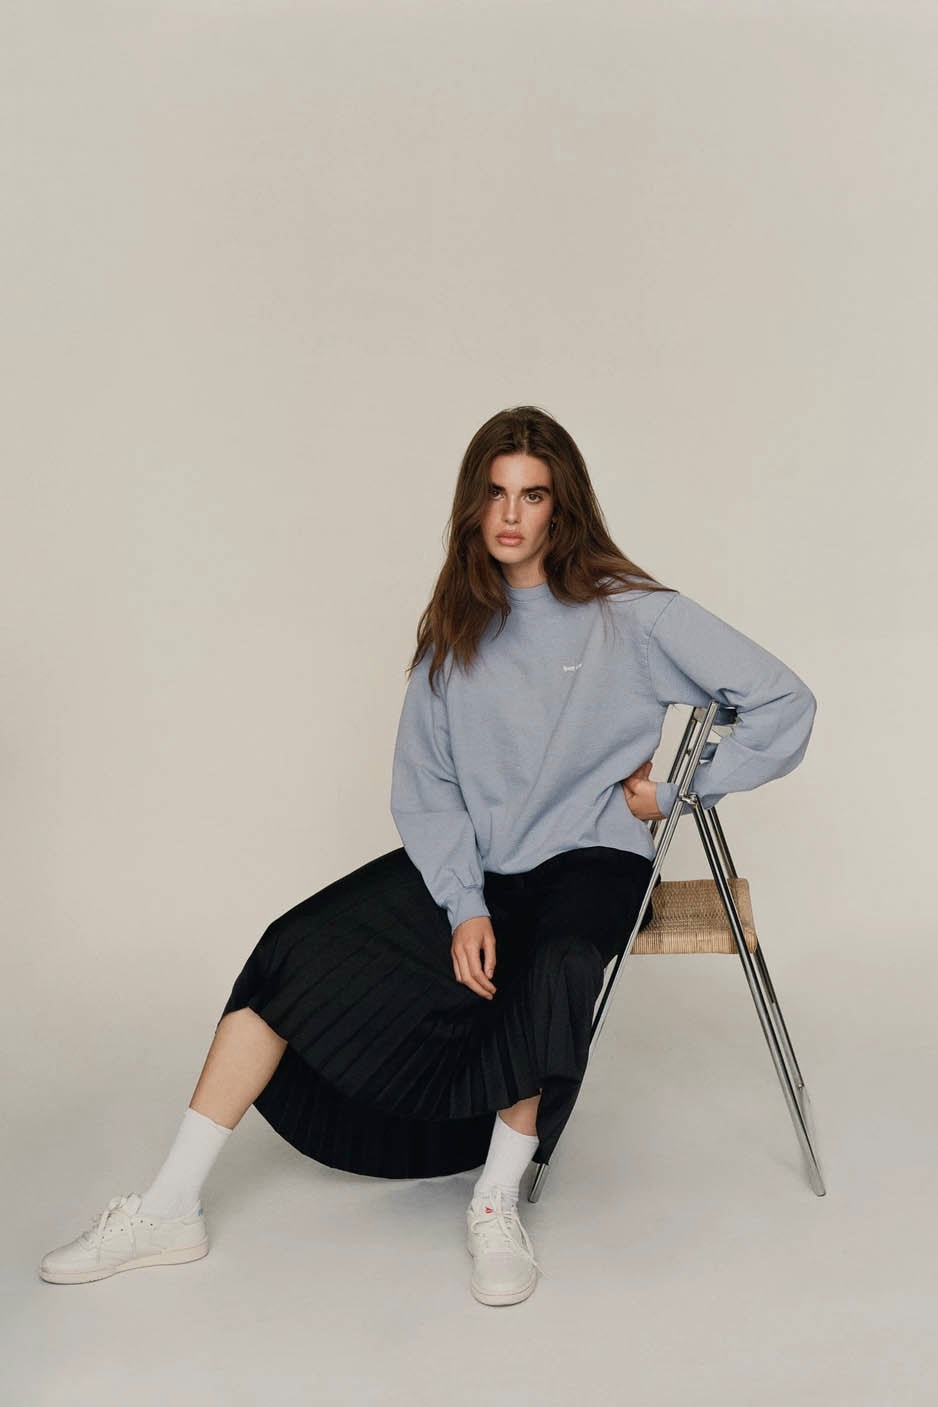 Sporty & Rich Emily Oberg Fall/Winter 2019 Drop Collection Lookbook Hoodies Streetwear